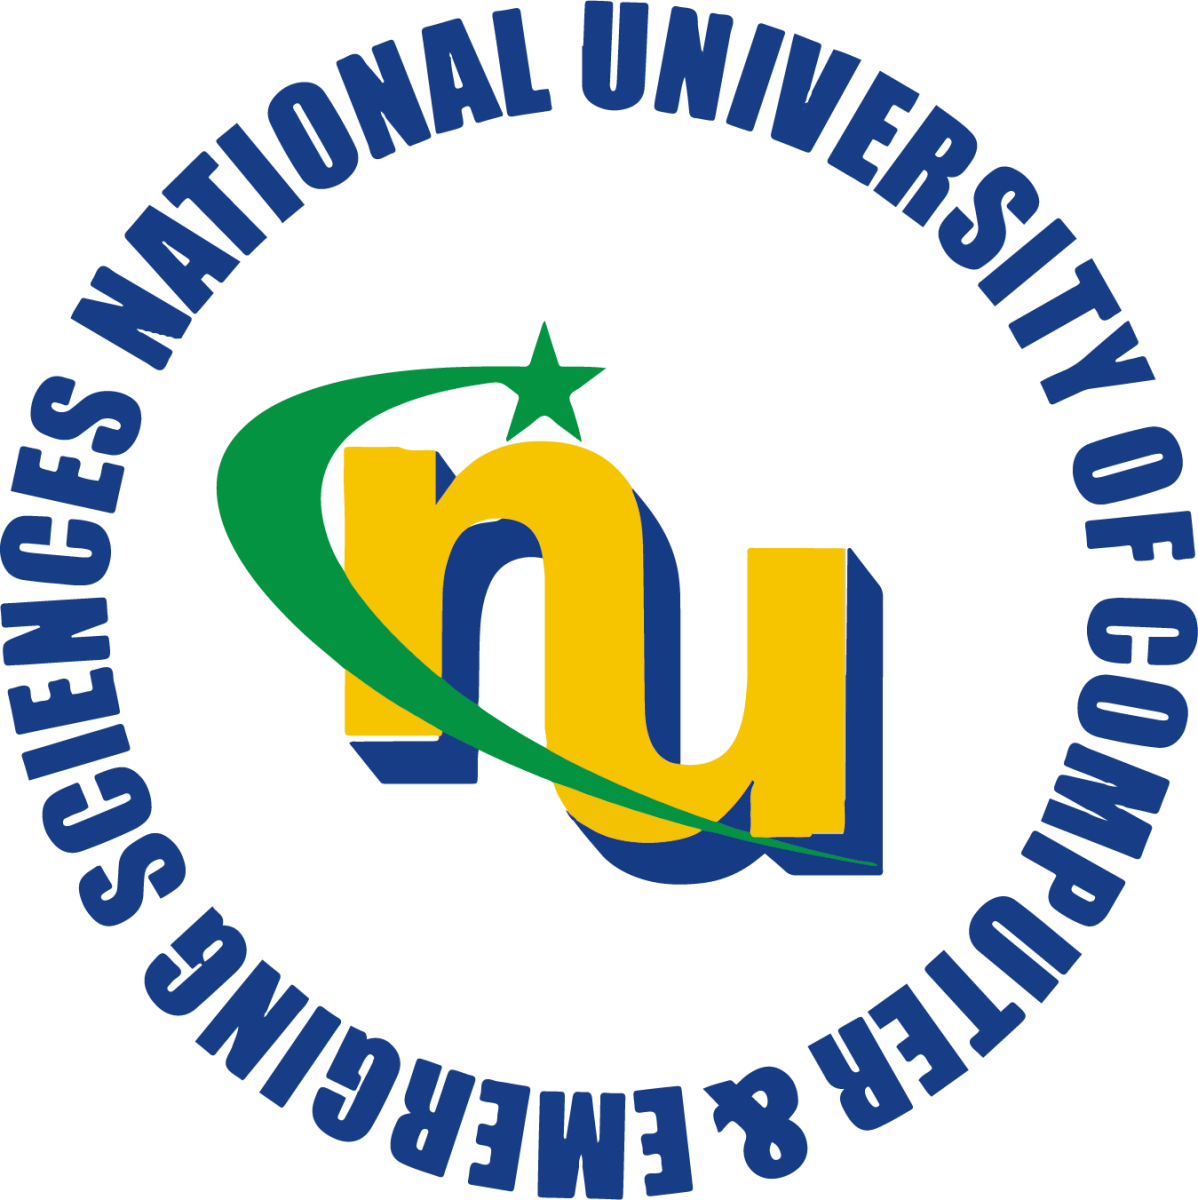 national university of computer & emerging sciences logo png #40186